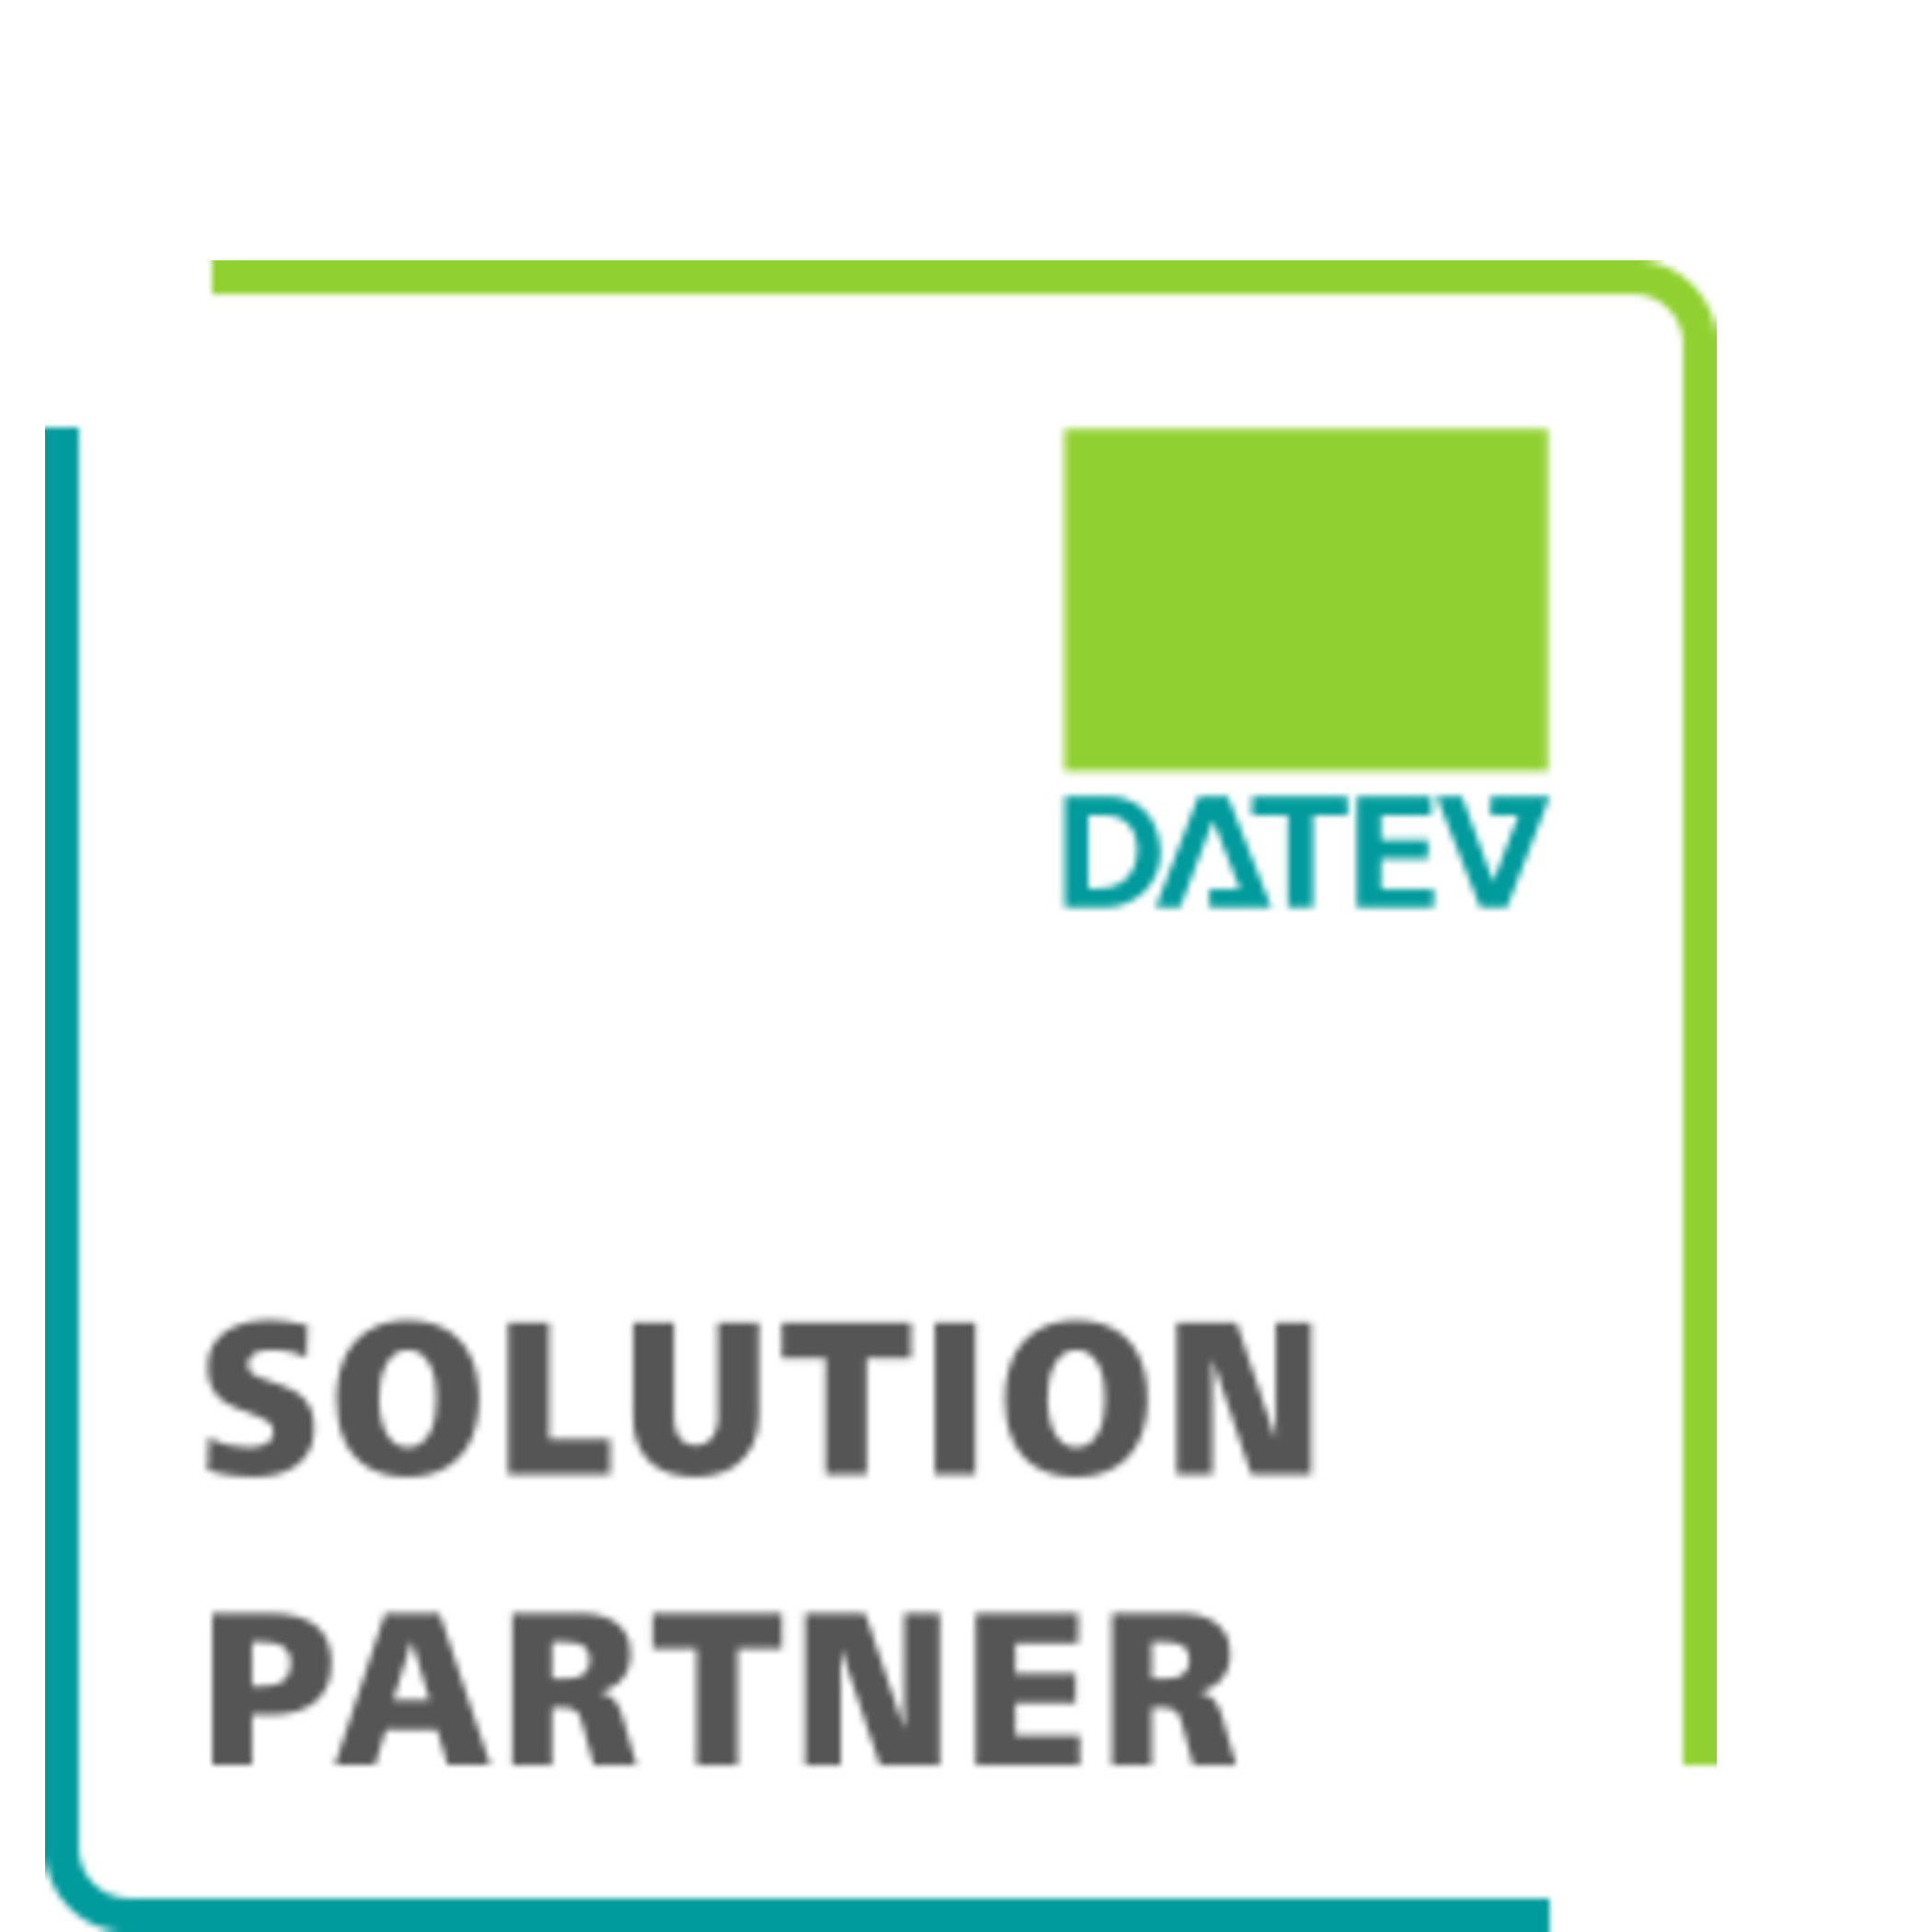 DATEV Solution Partner